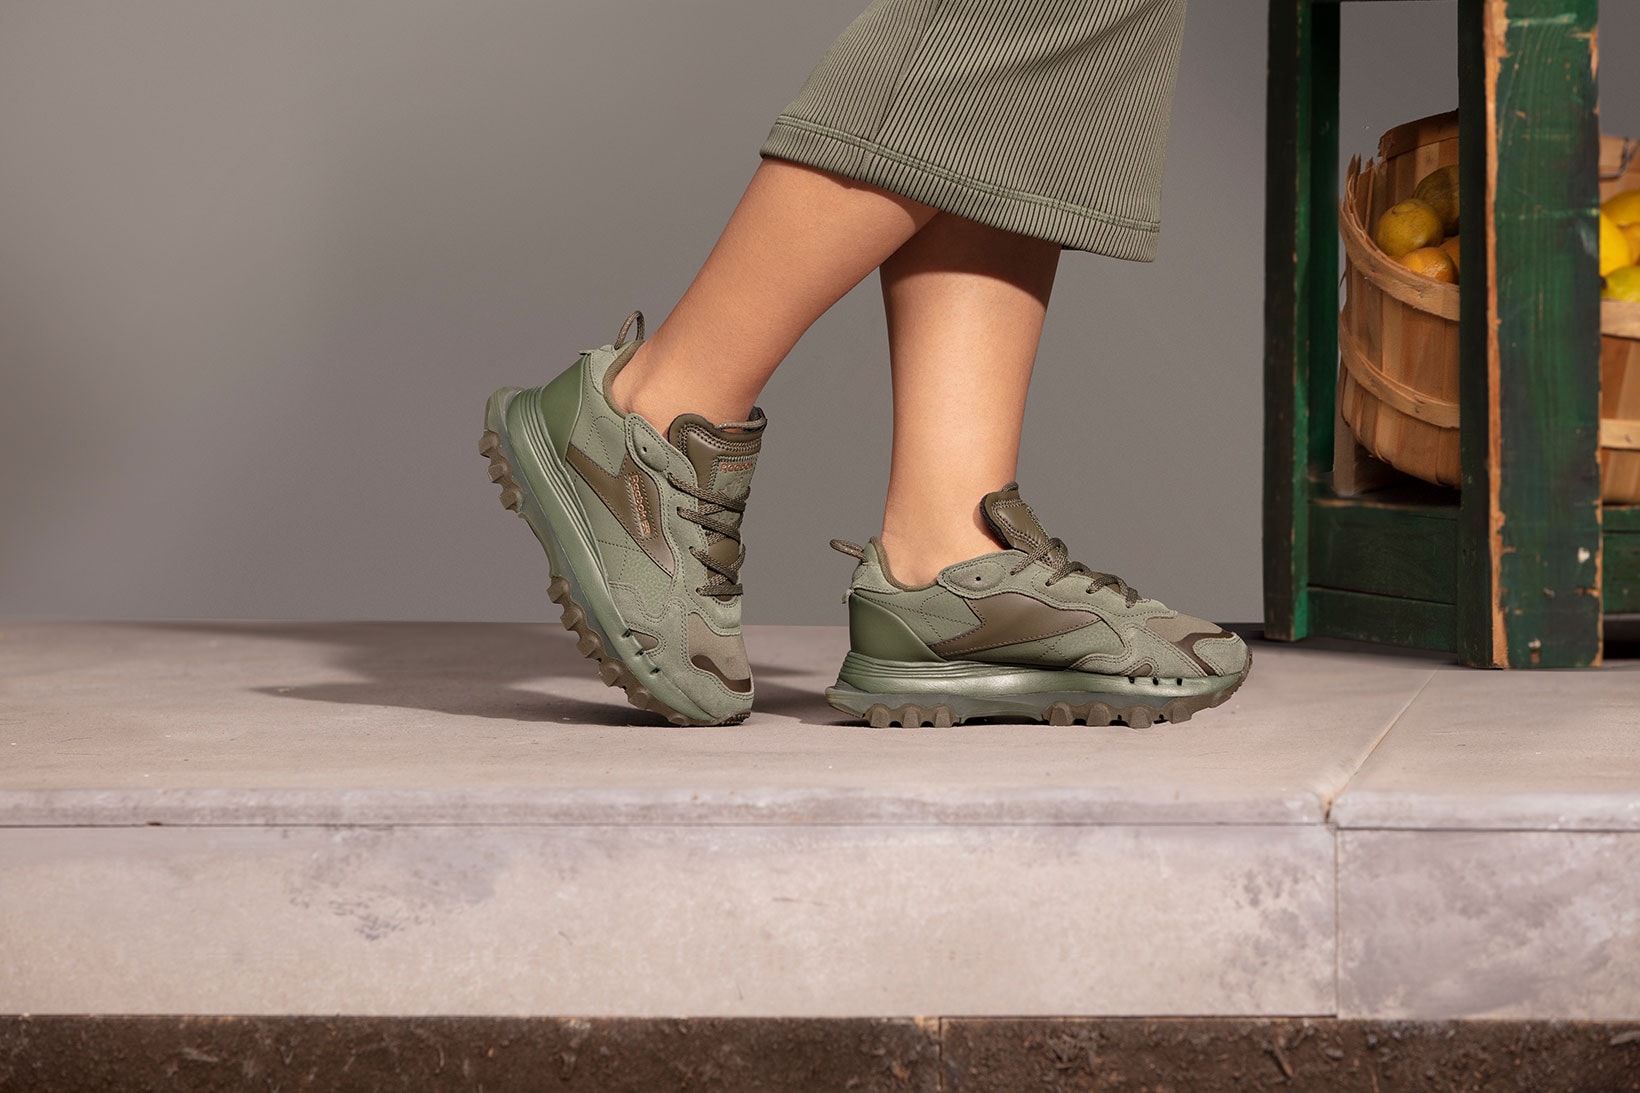 Cardi B Reebok Collaboration Apparel Sneakers NYC Classic Leather Khaki Green